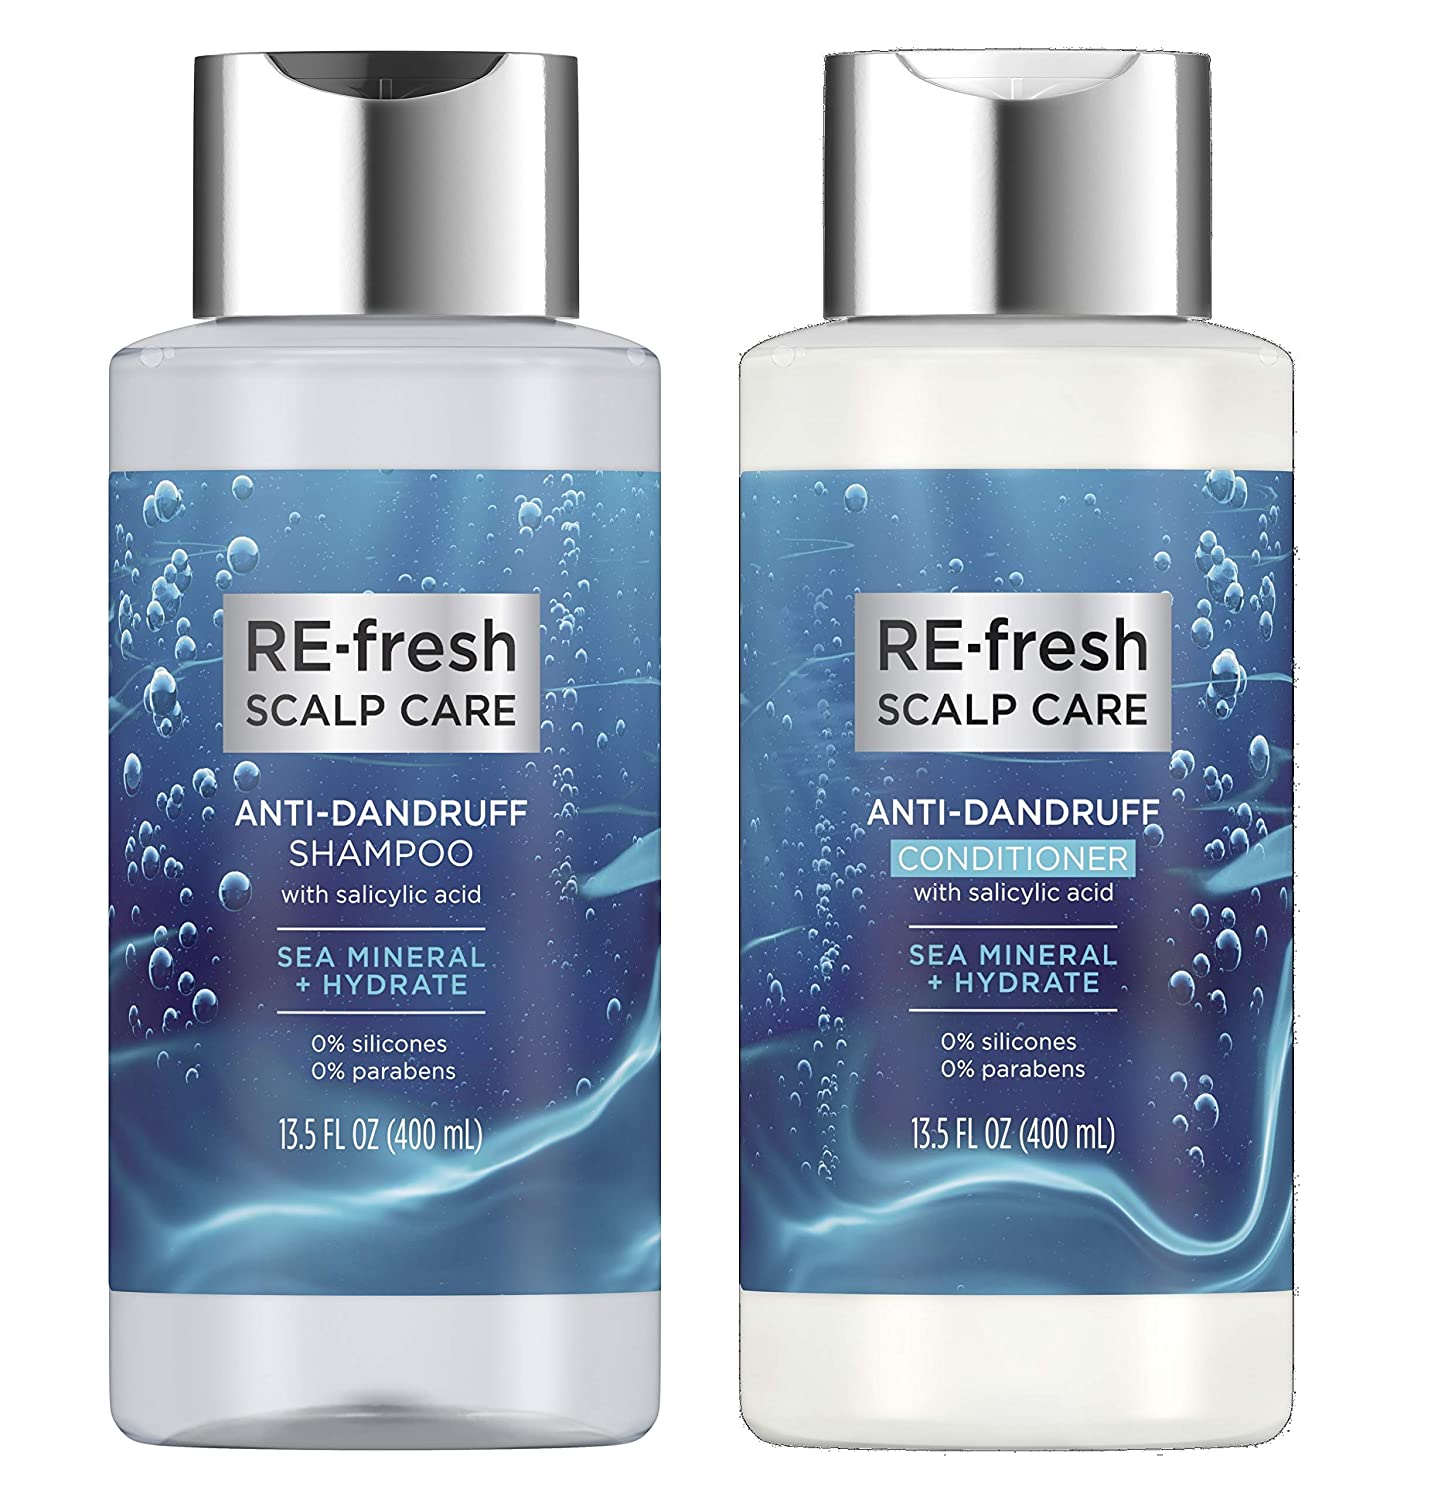  7. RE-fresh Scalp Care Anti-Dandruff Shampoo is ideal for dry hair. 